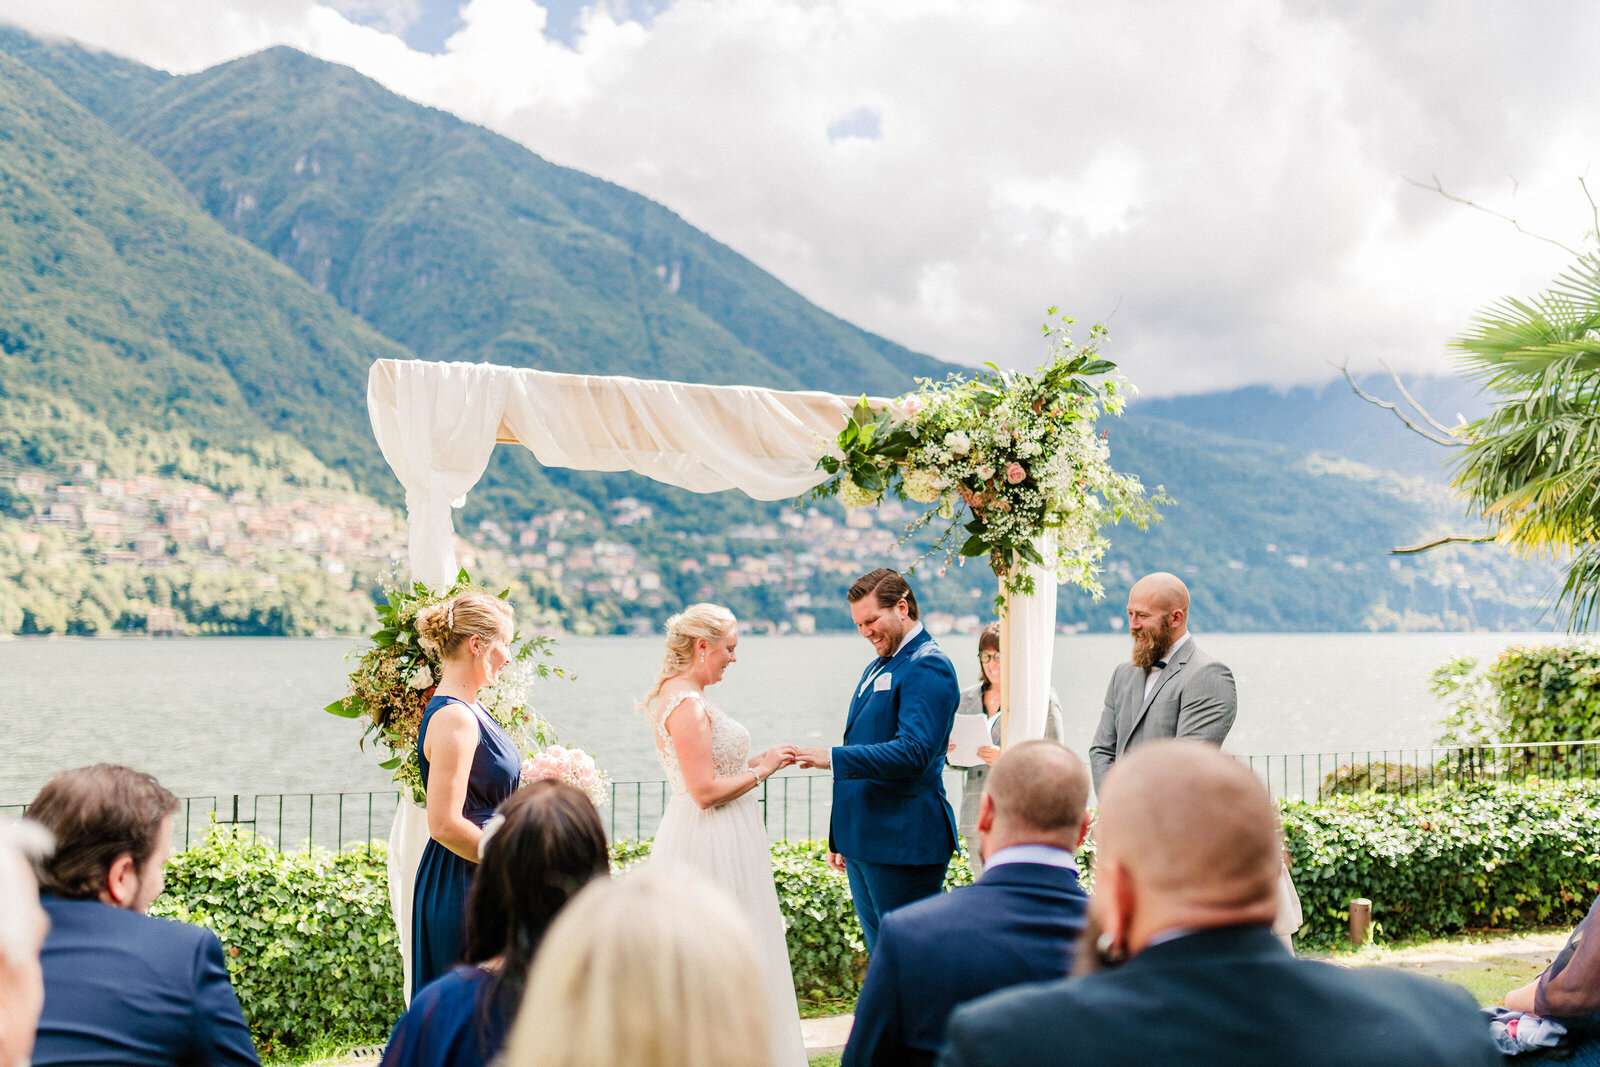 Outdoor ceremony with Lake Como as a backdrop